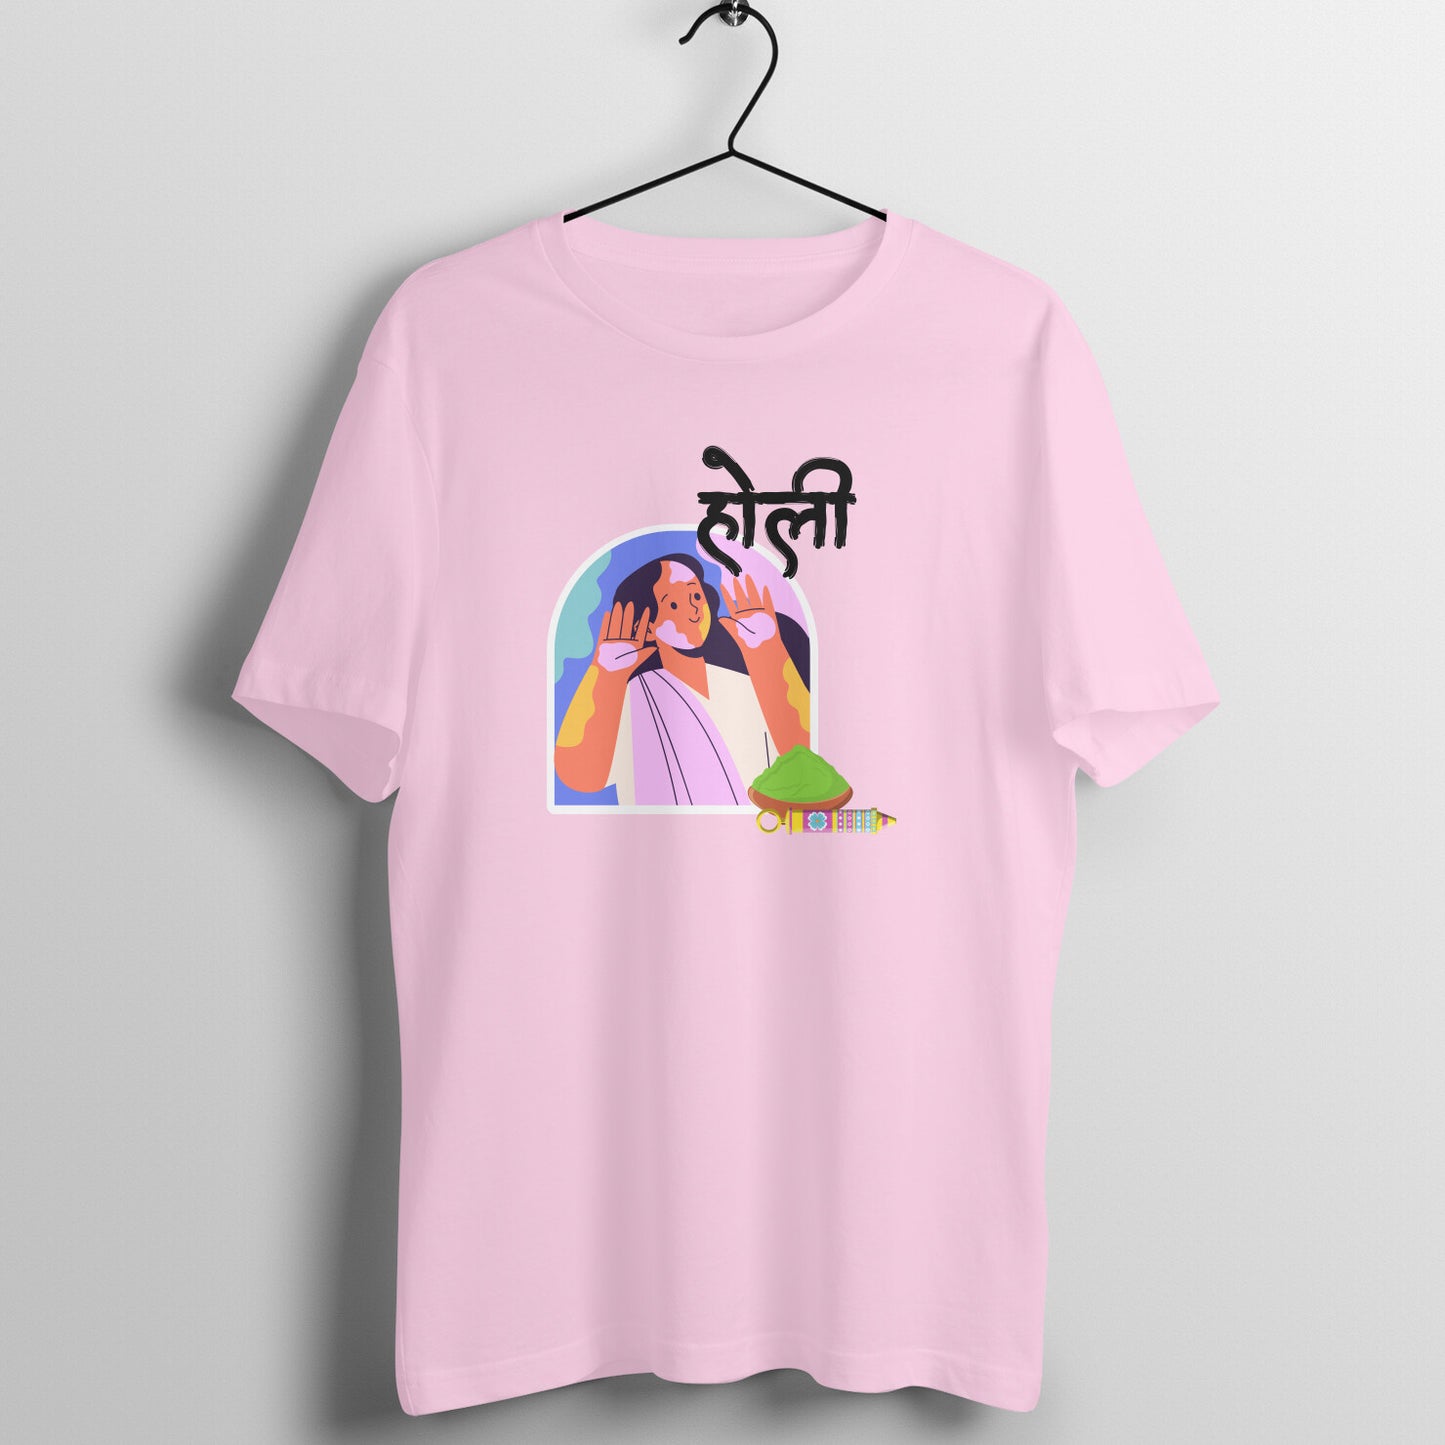 Cultural Celebration: Men's Round Neck T-Shirt with Traditional Holi Festival Girl Design